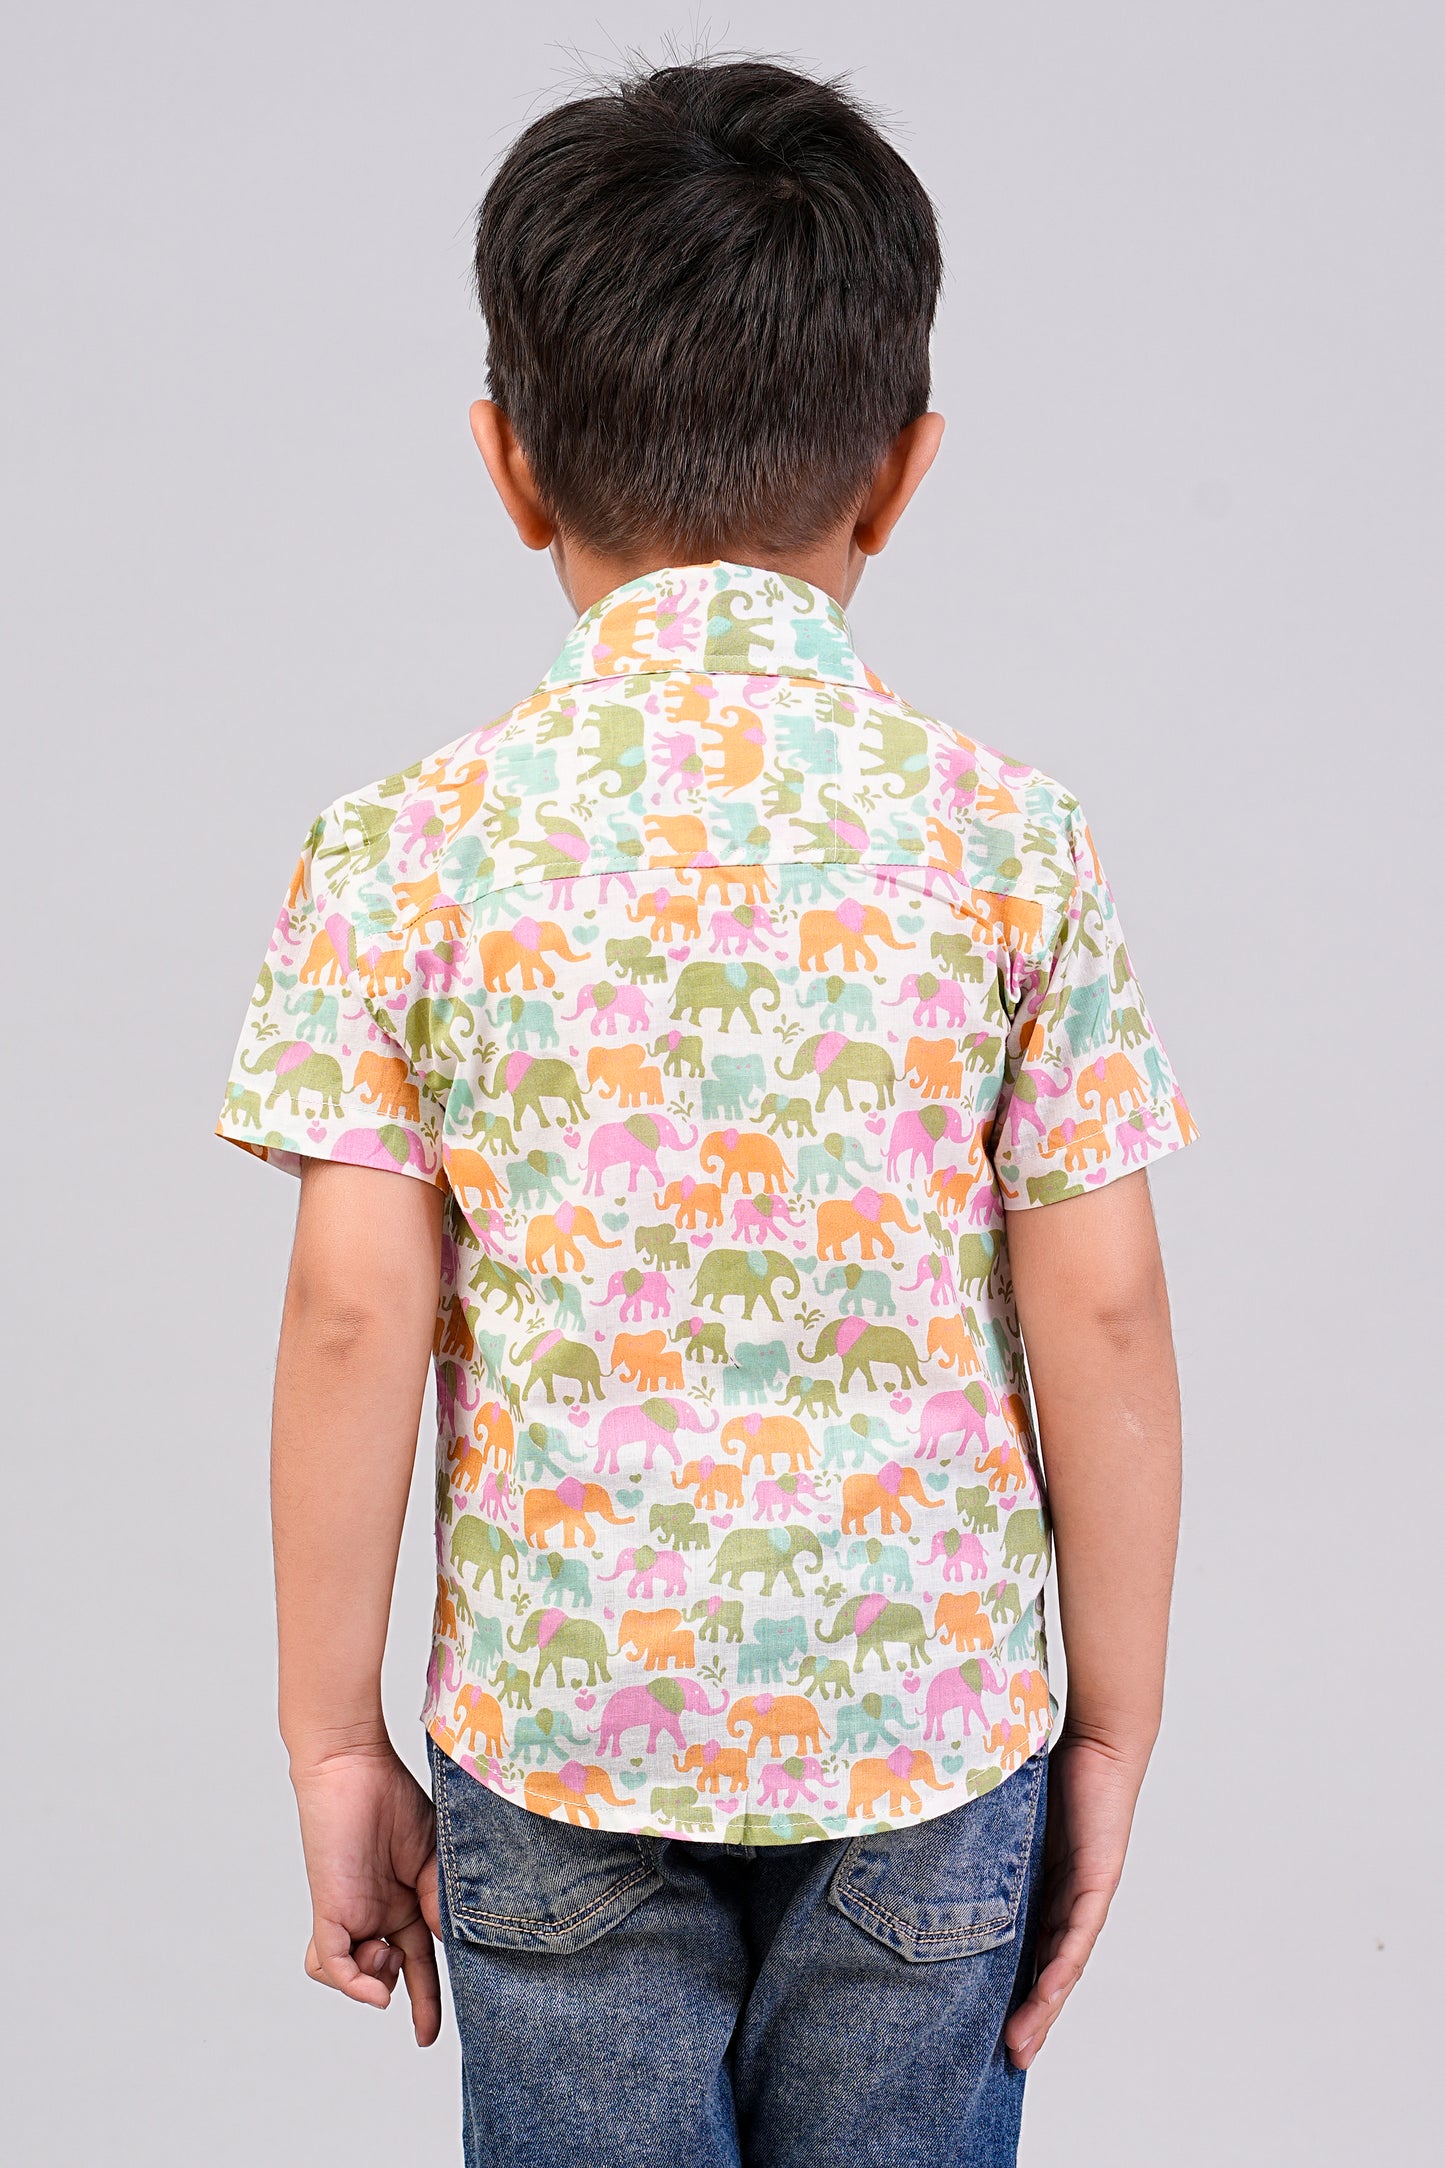 Boy's Elephant Printed Half-Sleeves Shirts